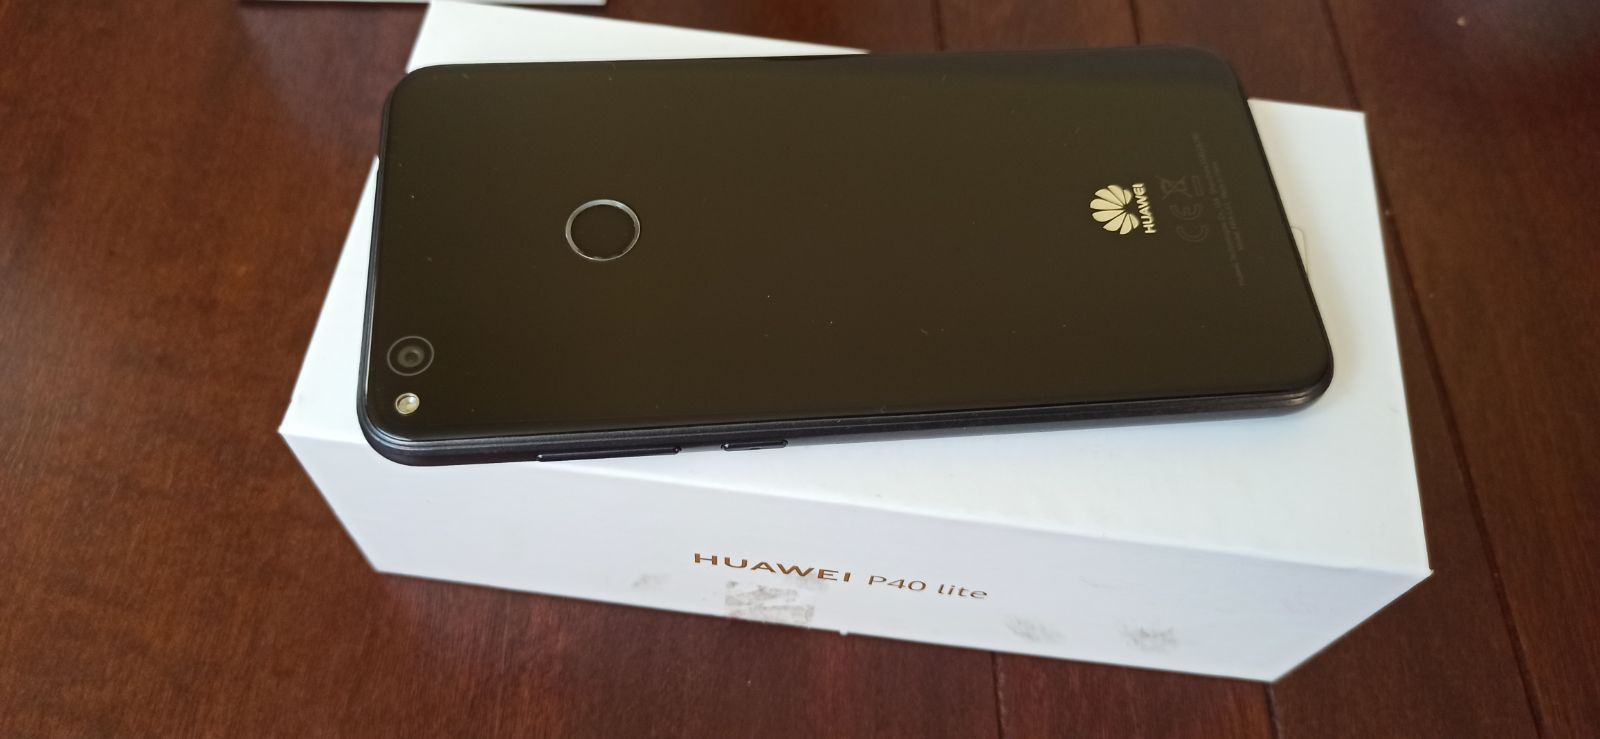 Huawei p9 lite zadbany